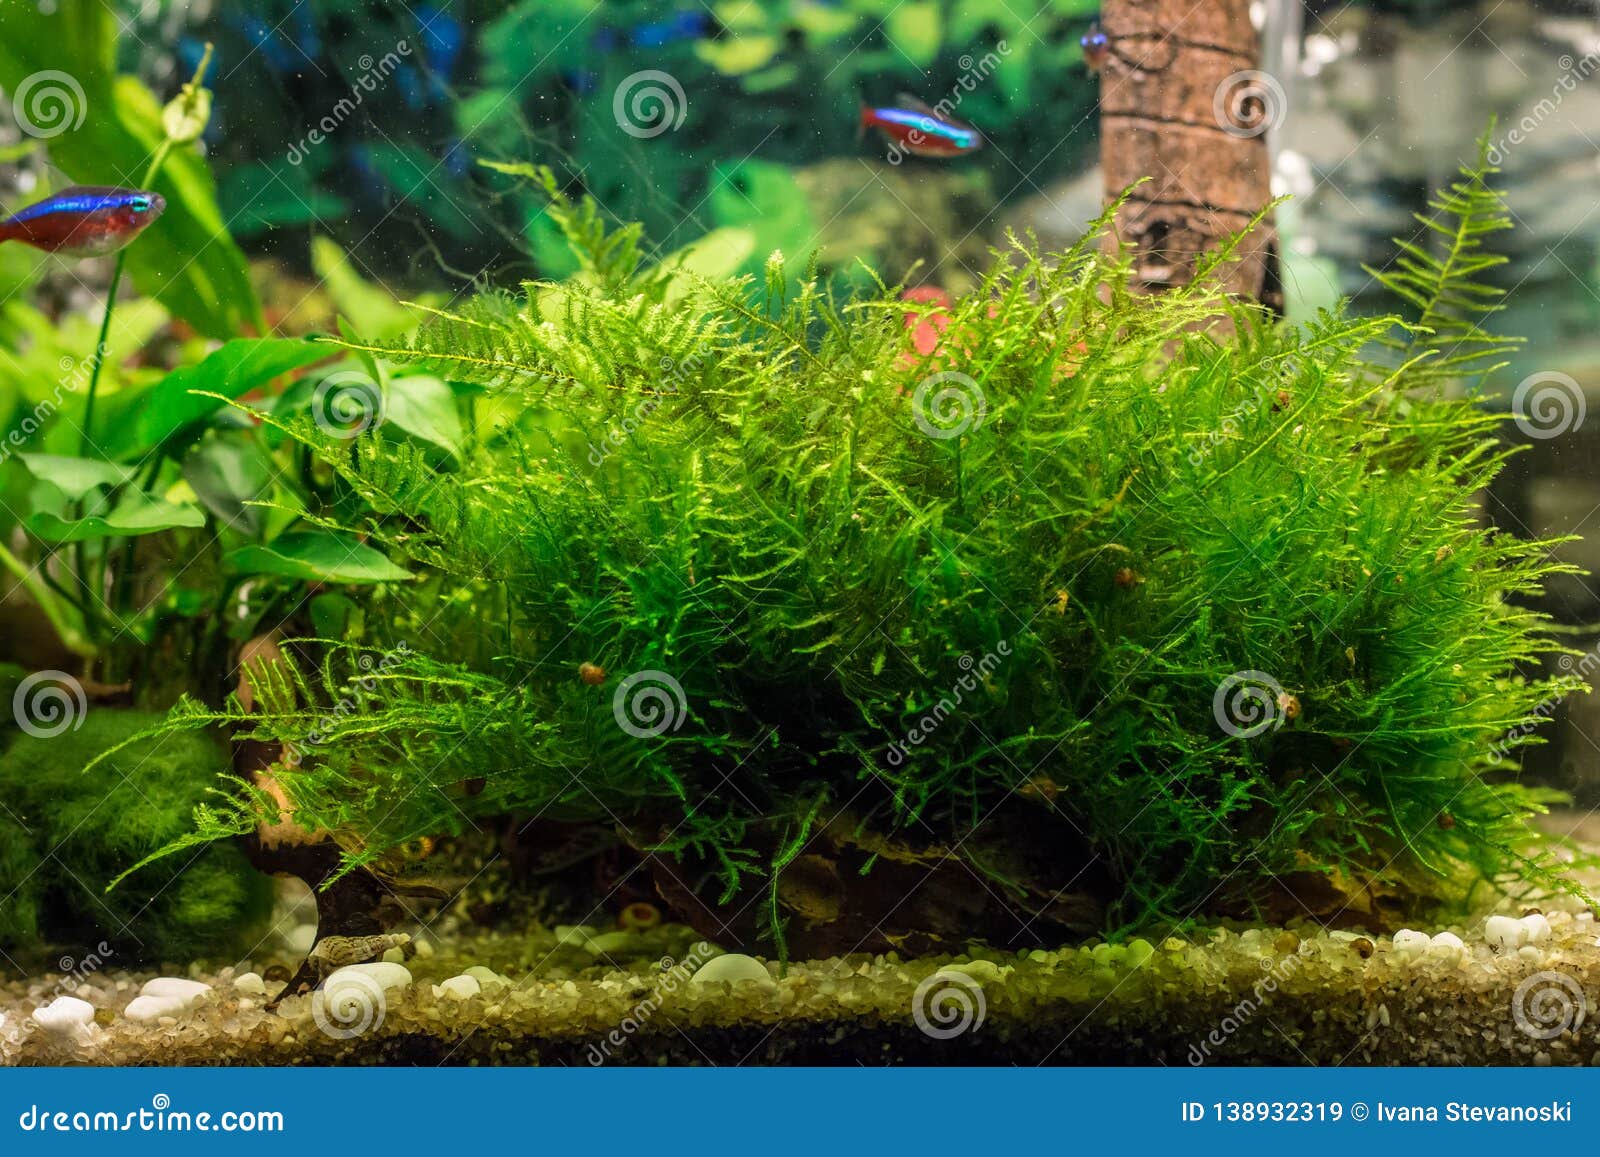 Skrivemaskine kopi ting Java Moss / Vesicularia in Aquarium Stock Image - Image of vesicularia,  home: 138932319